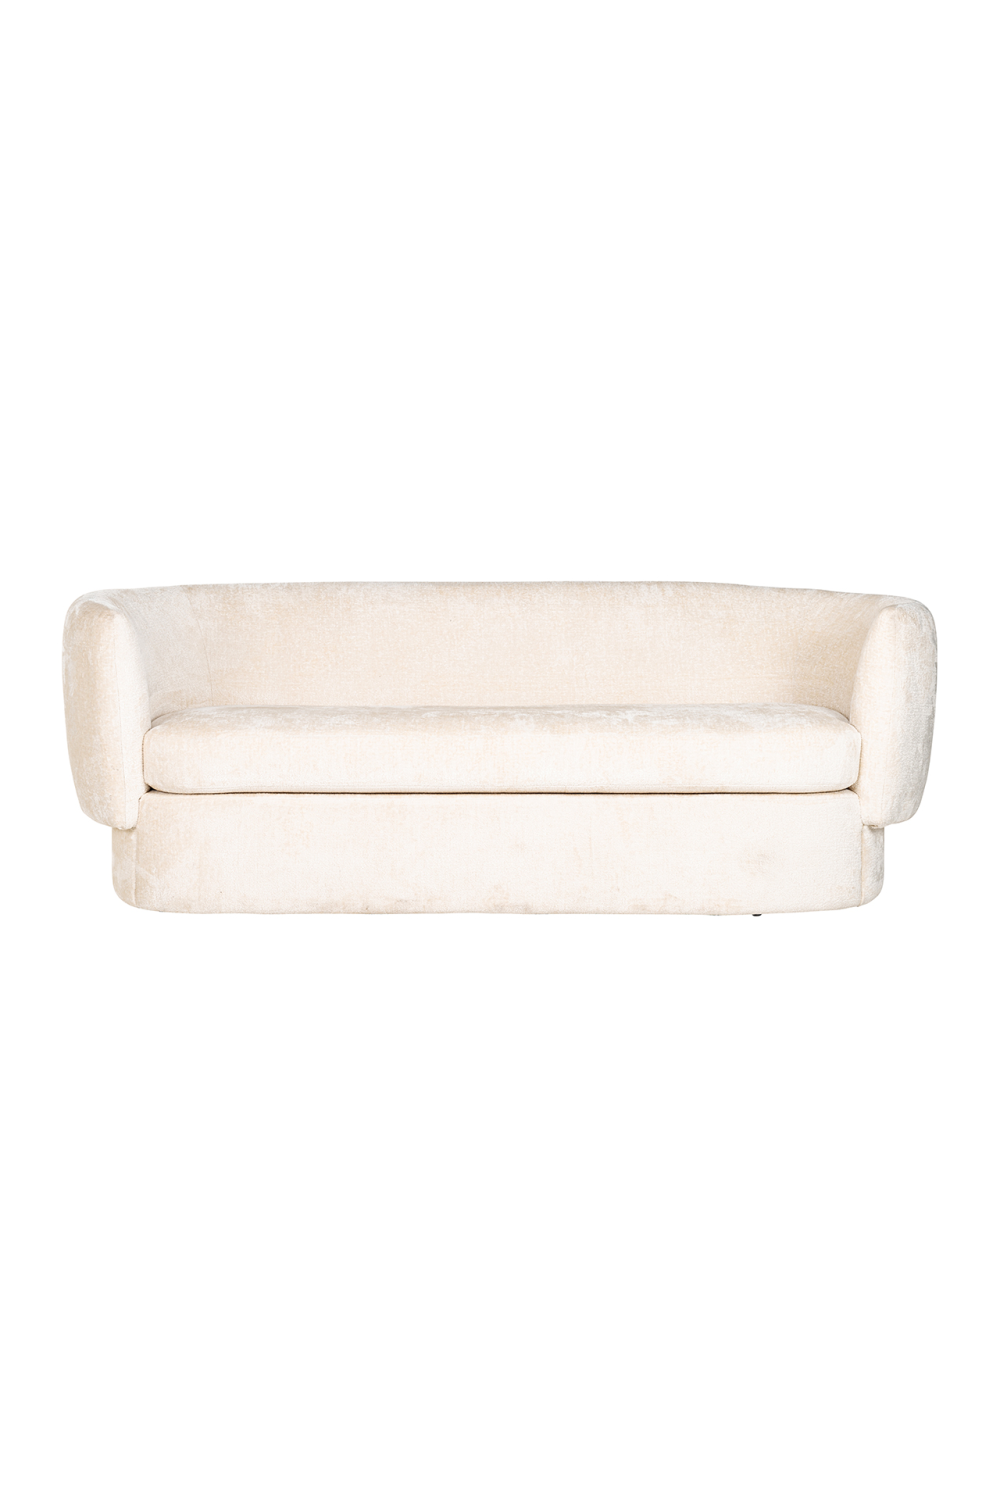 Modern Upholstered Sofa | OROA Donatella | OROA.com